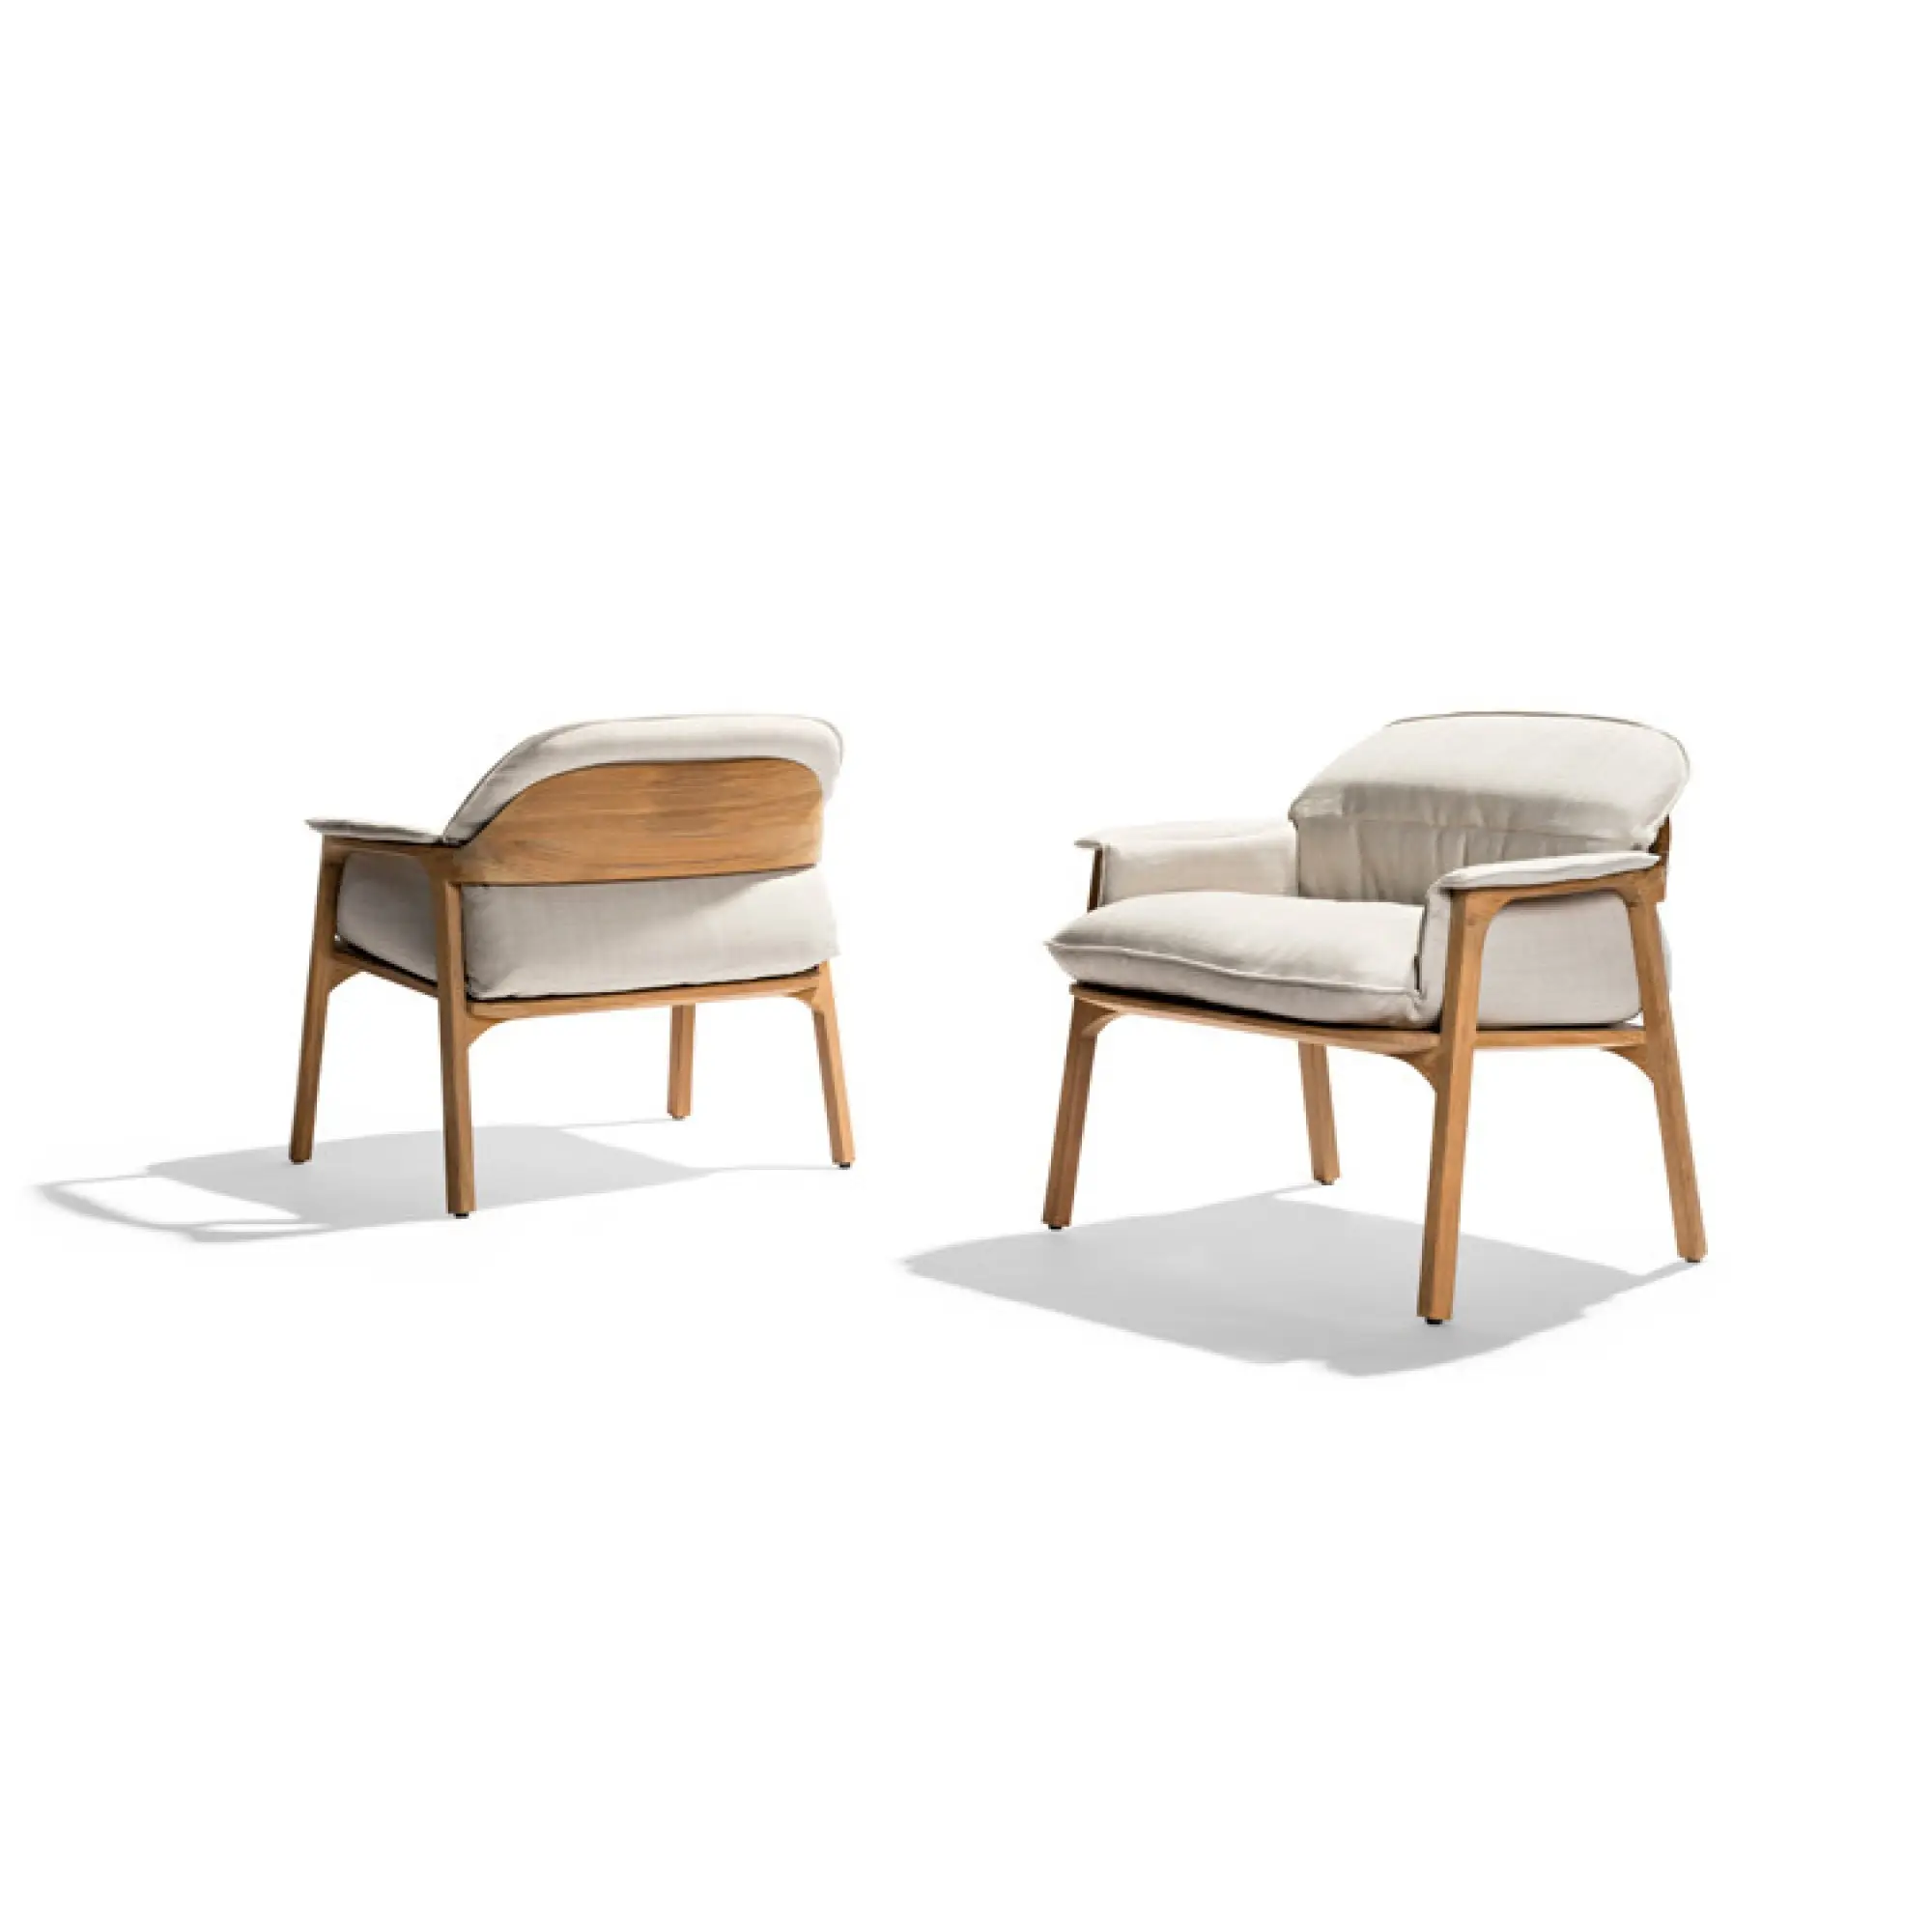 Teak garden furniture Nordic style wooden outdoor armchair leisure teak lounge chairs